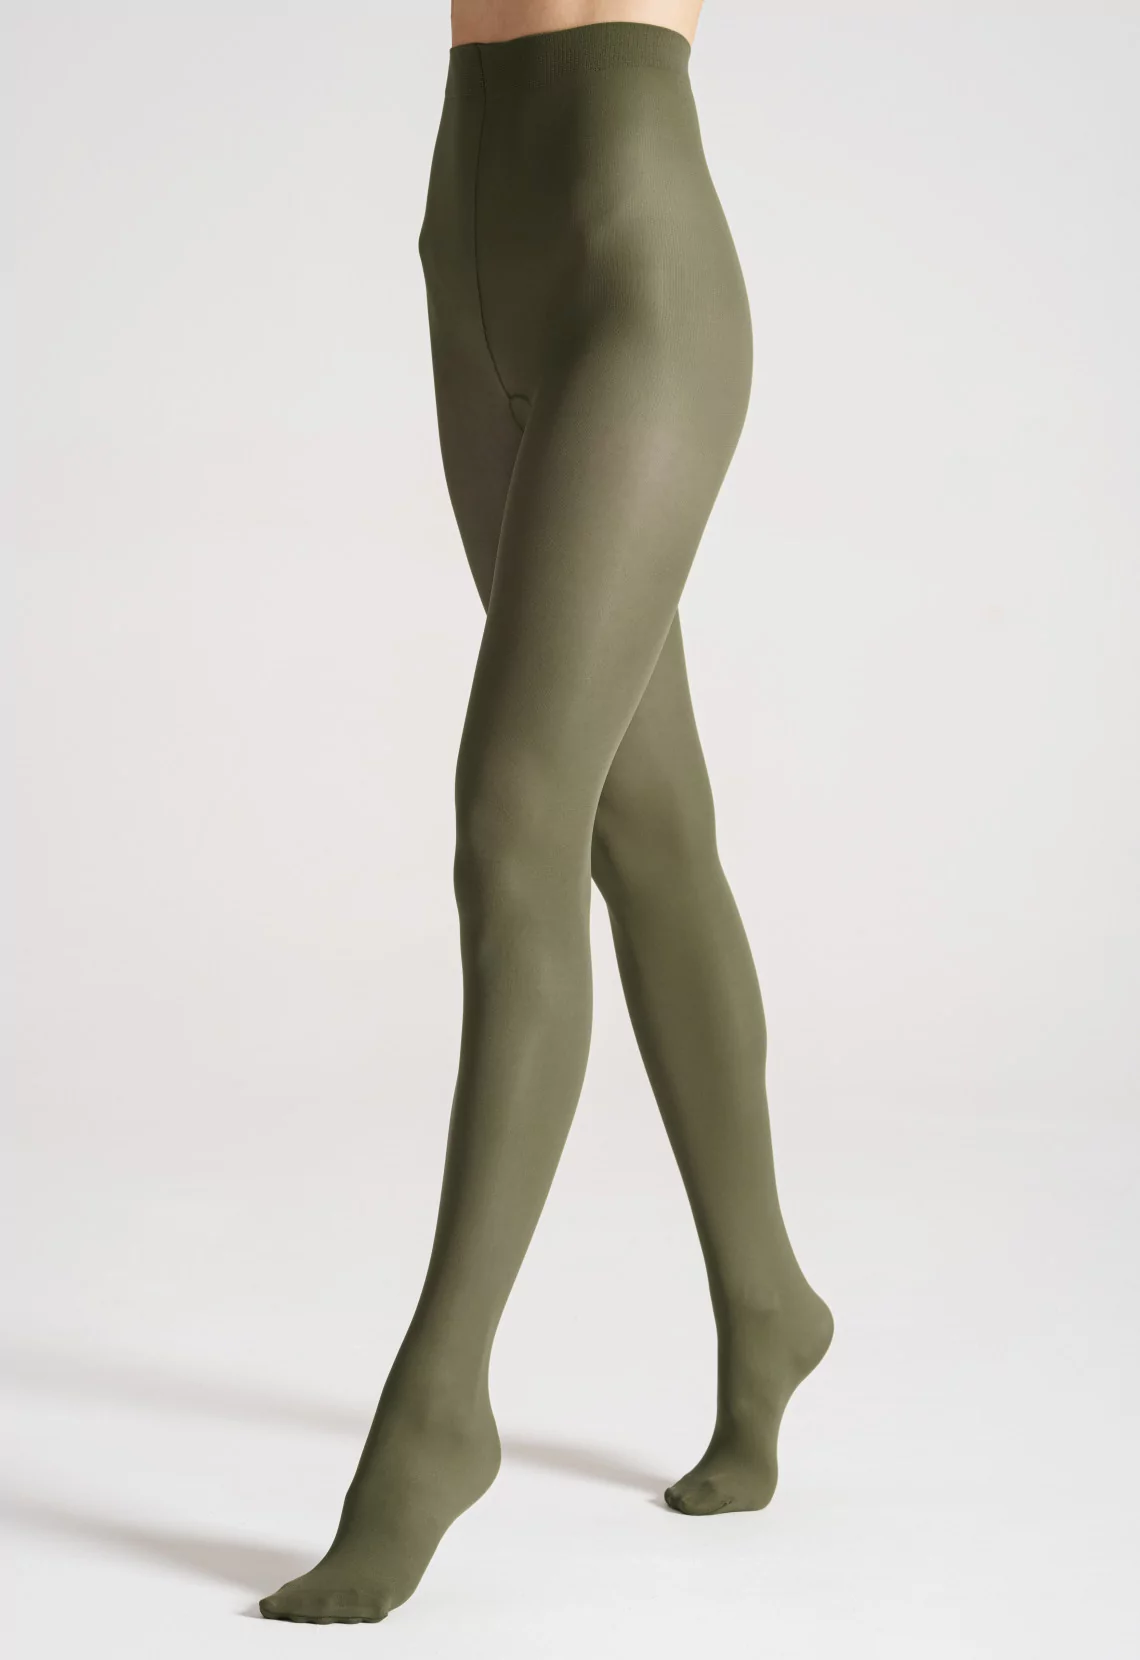 Panty satin 40 den-gekleurde pantys dames -groene panty